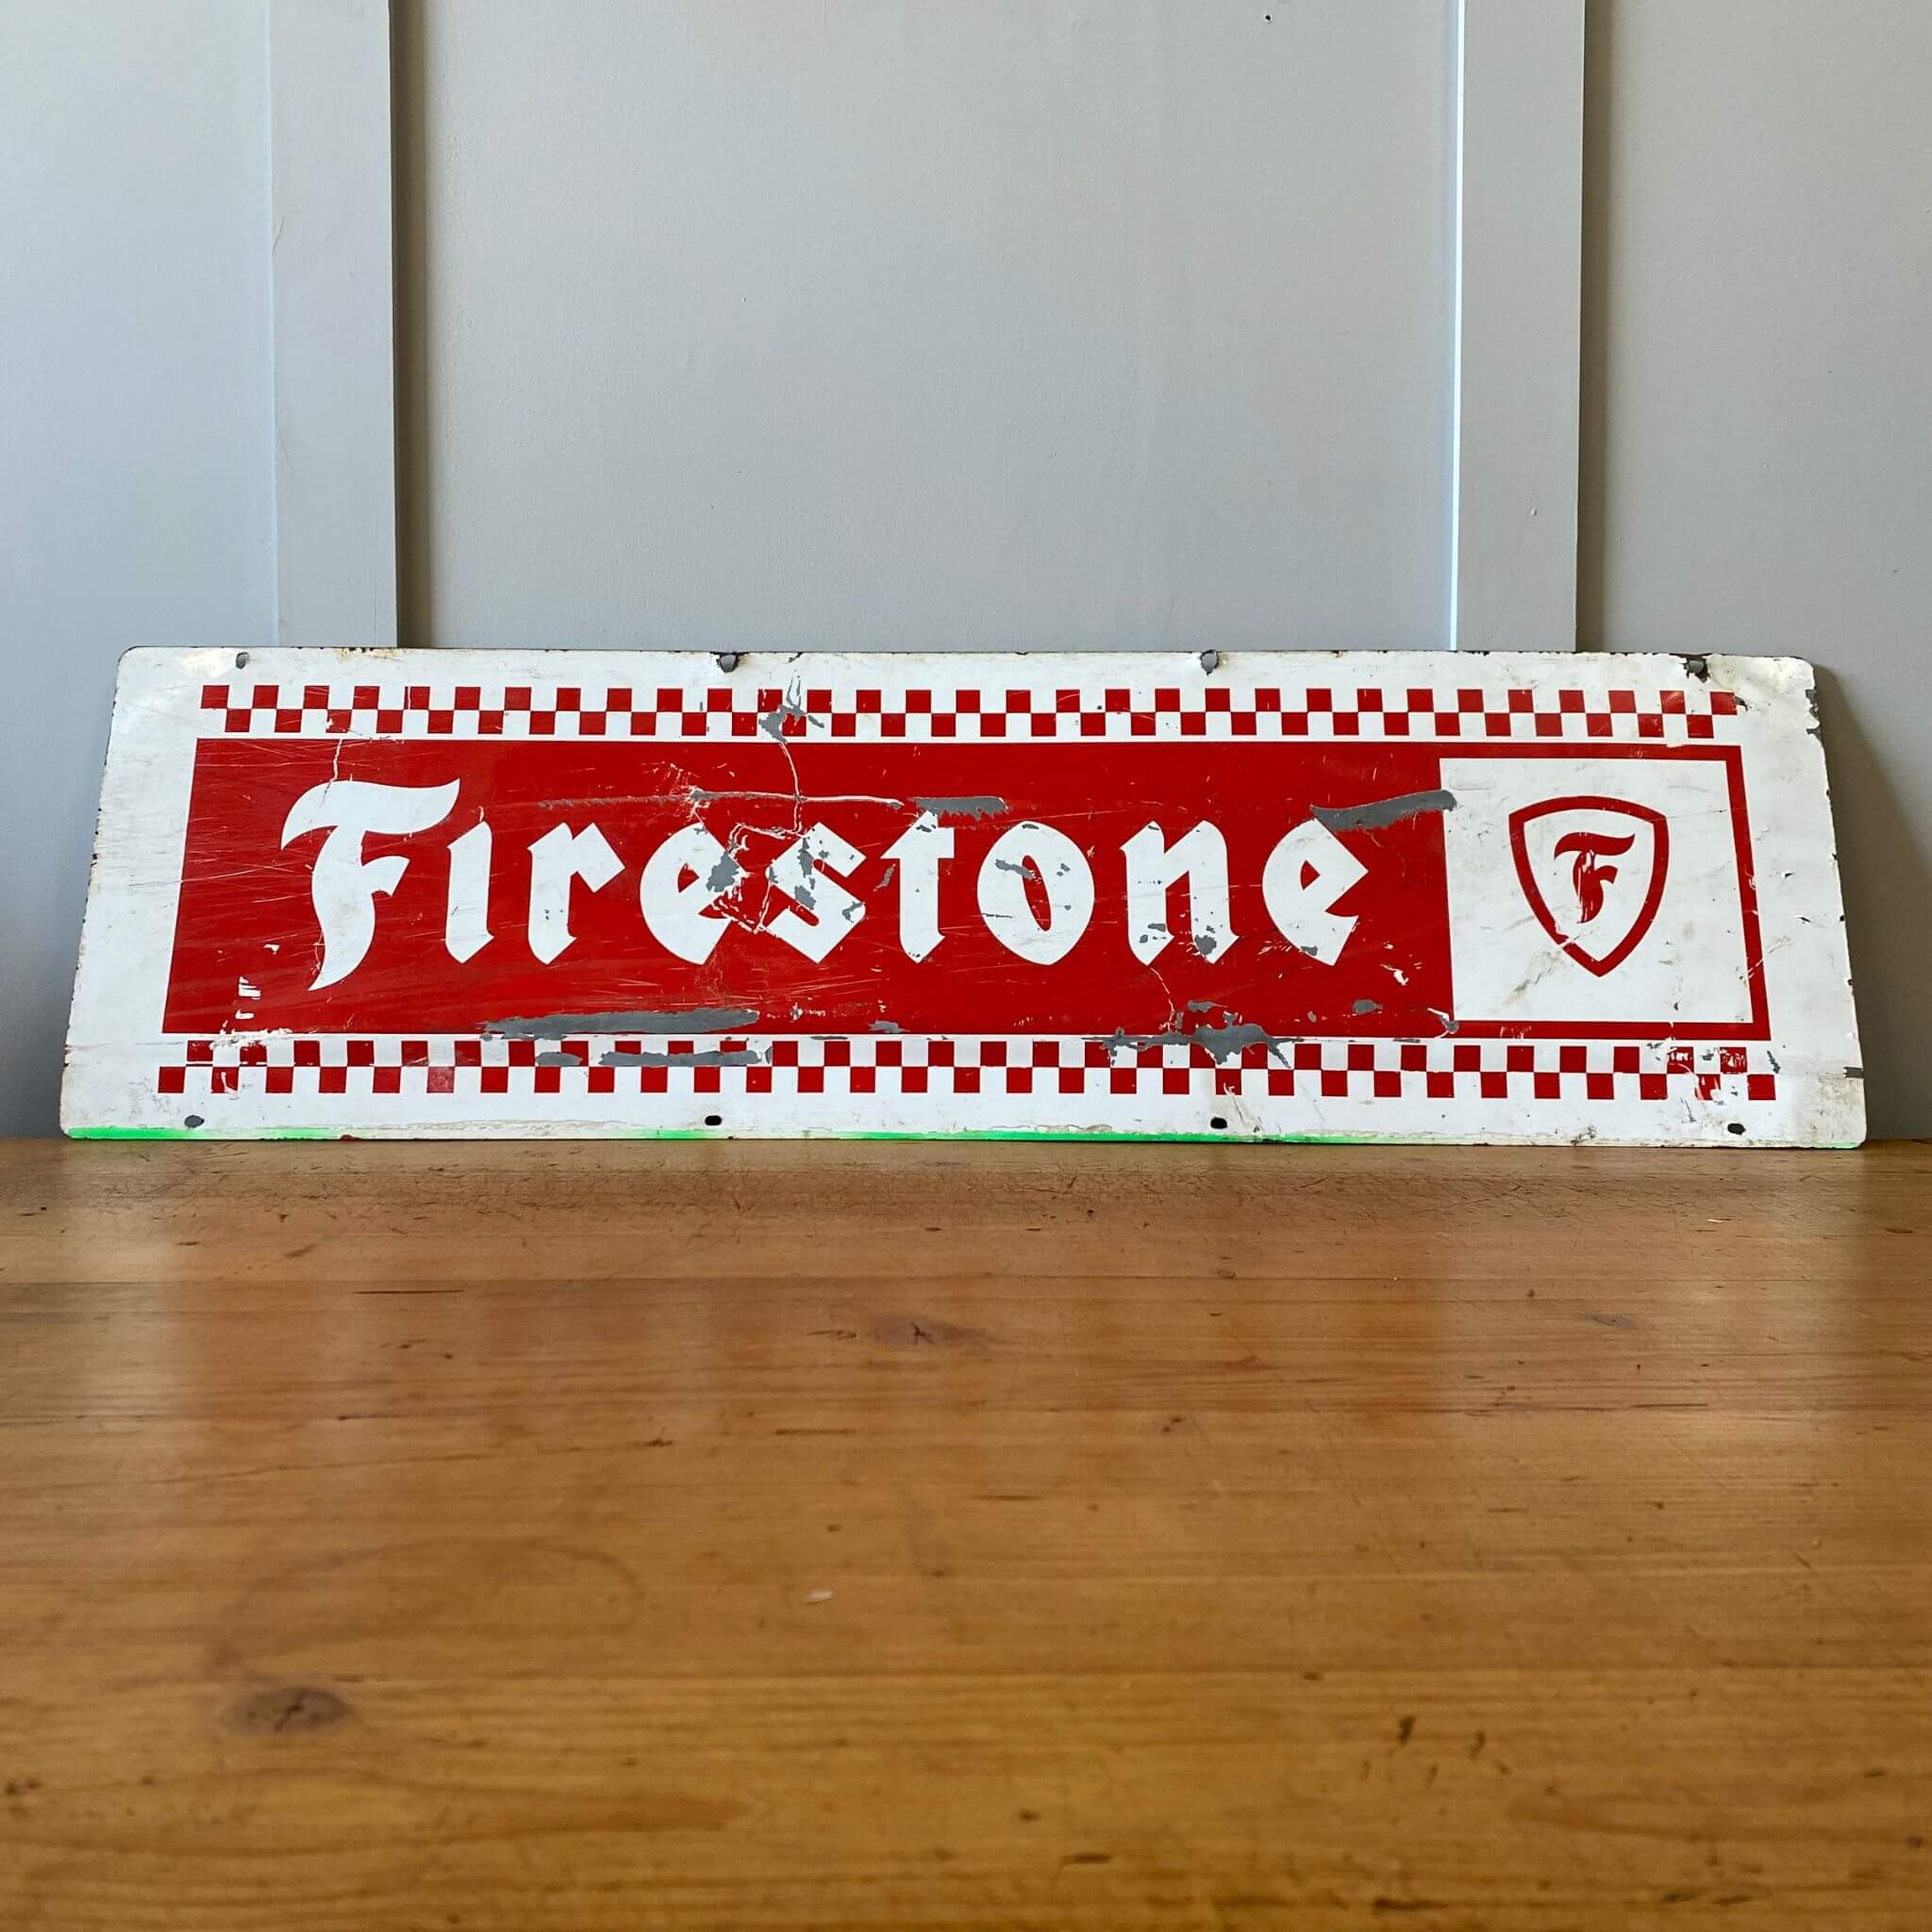 Firestone sign